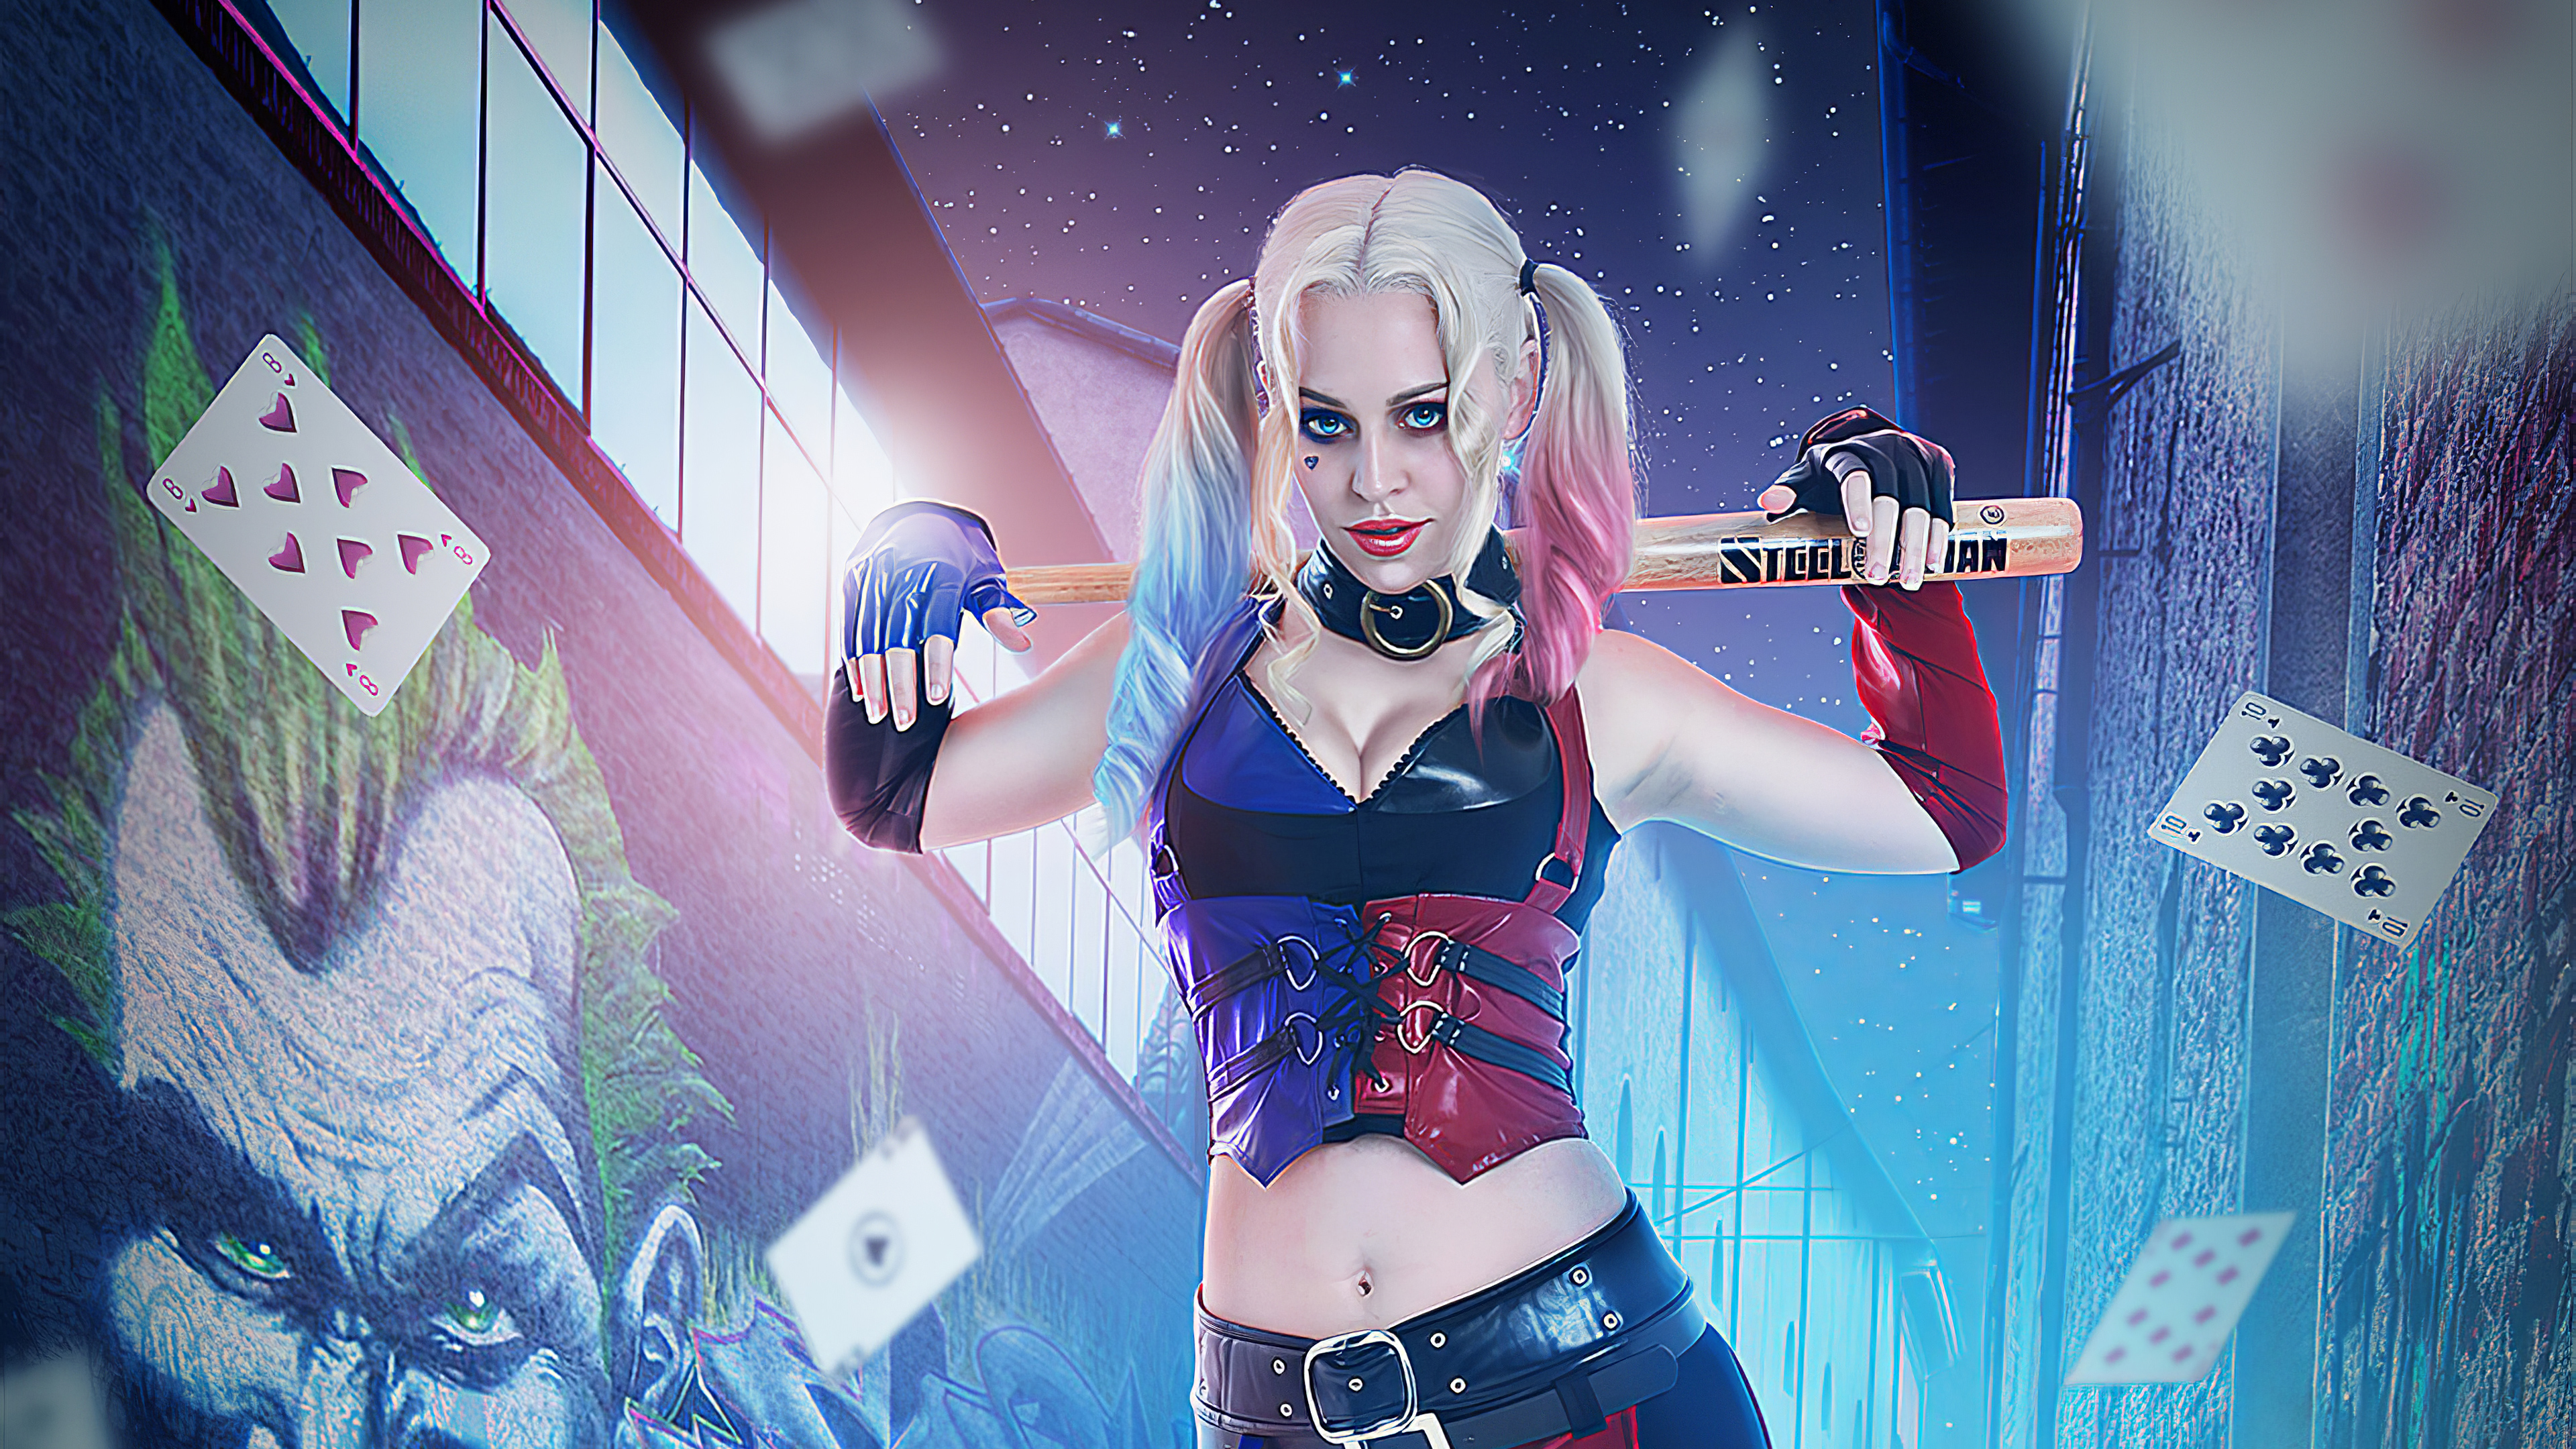 Download 4k Harley Quinn Cosplay wallpapers, Harley Quinn Cosplay 4k wallpa...